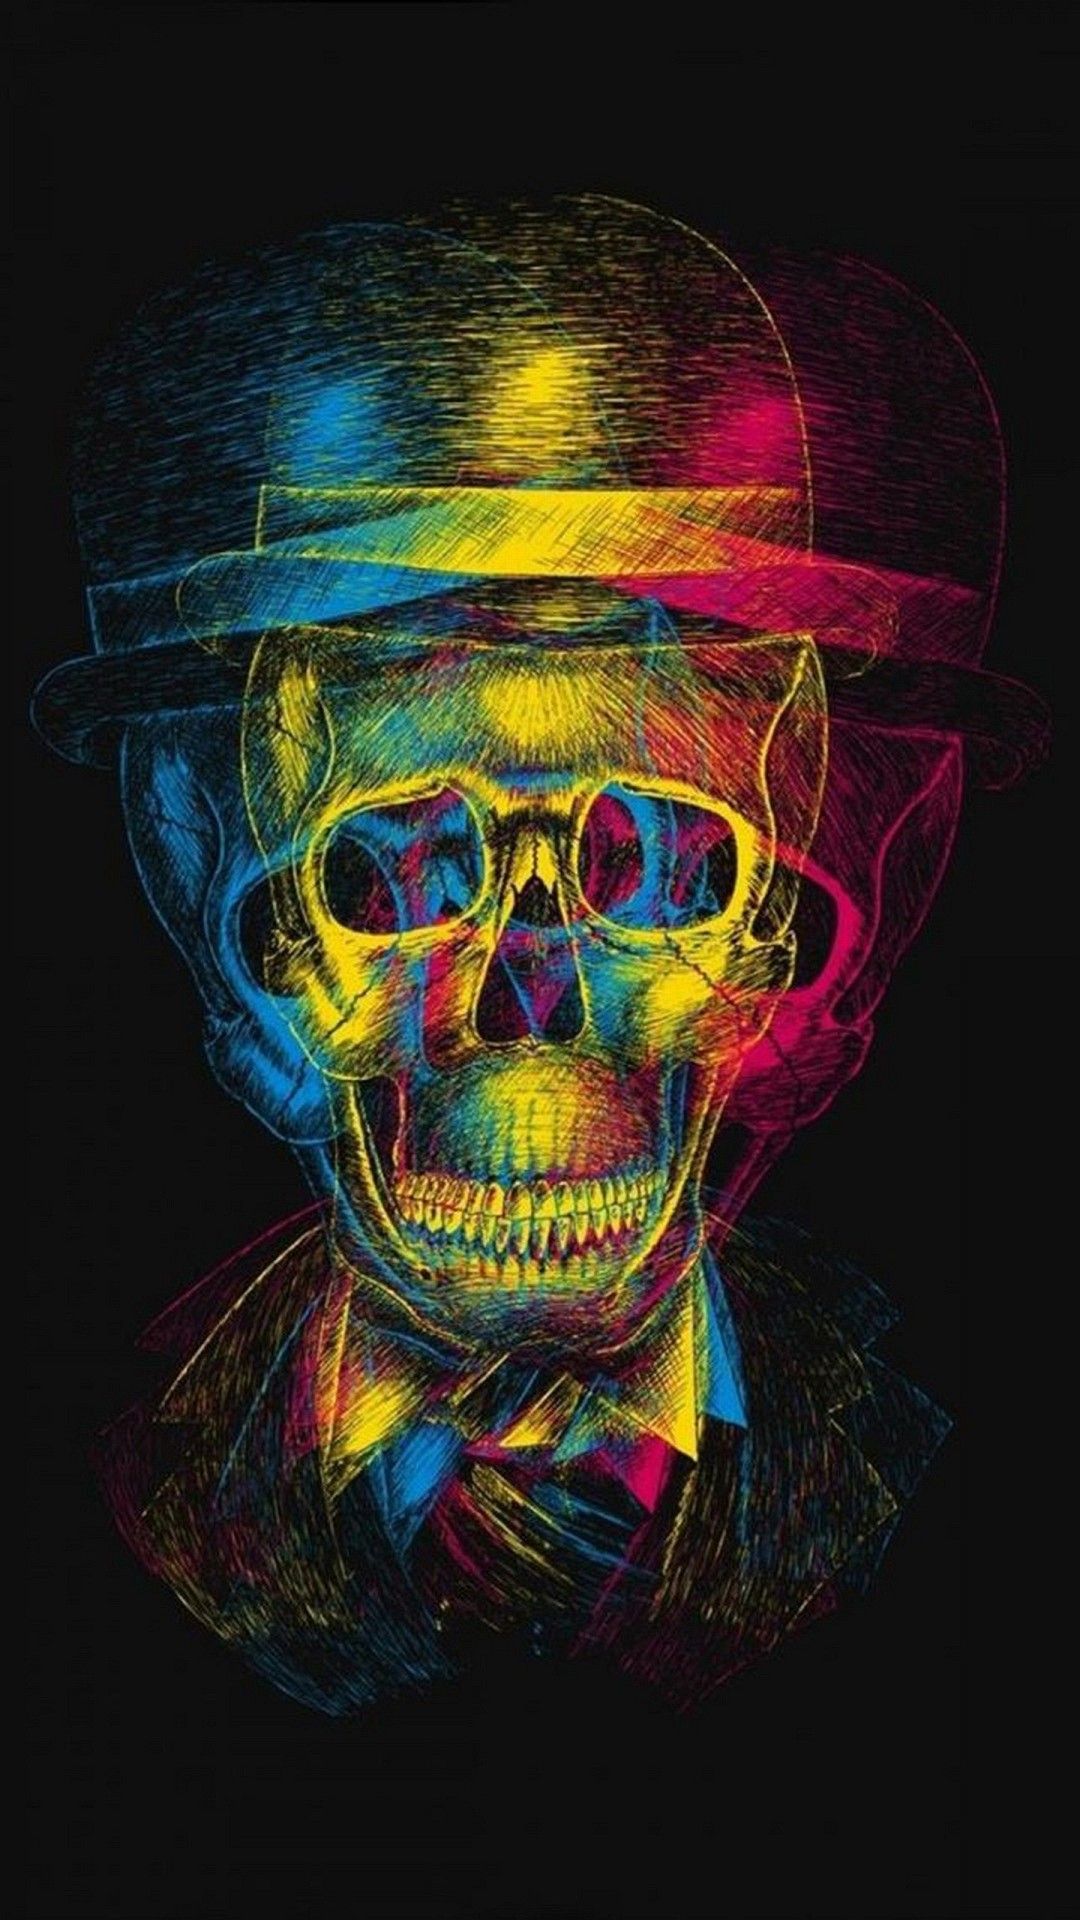 200+] Skull Iphone Wallpapers | Wallpapers.com